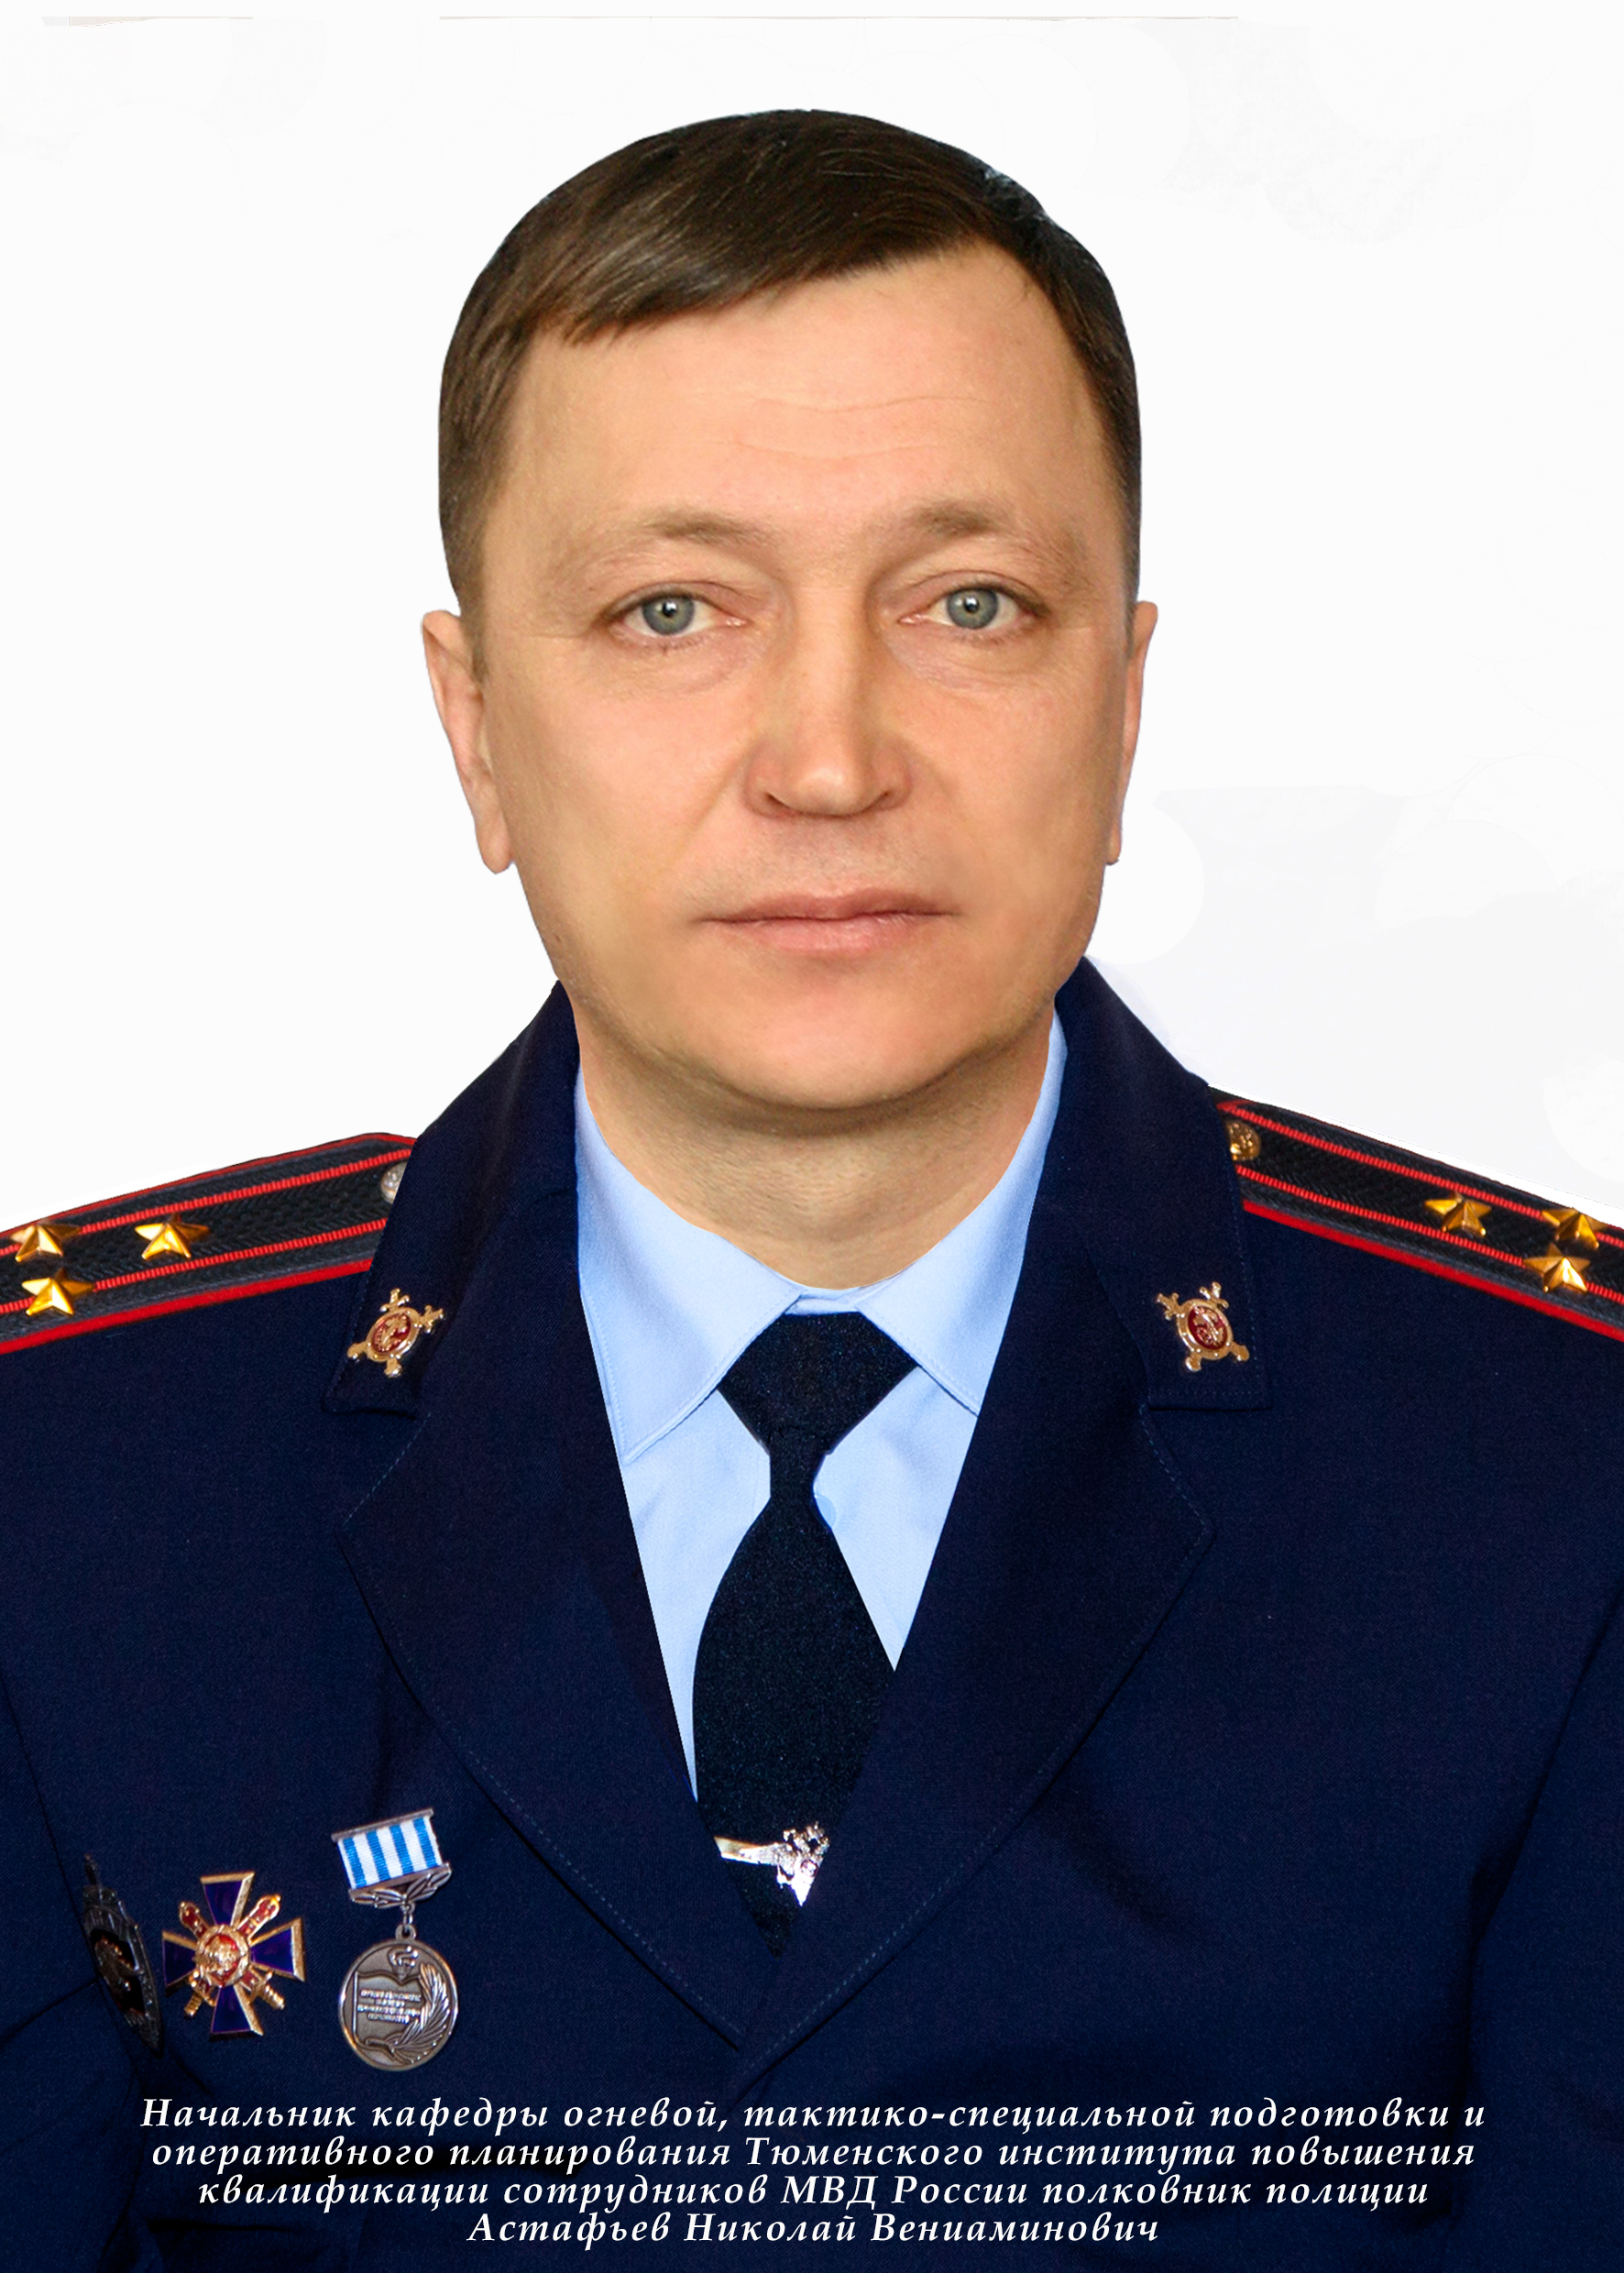                         Astafiev Nikolay
            